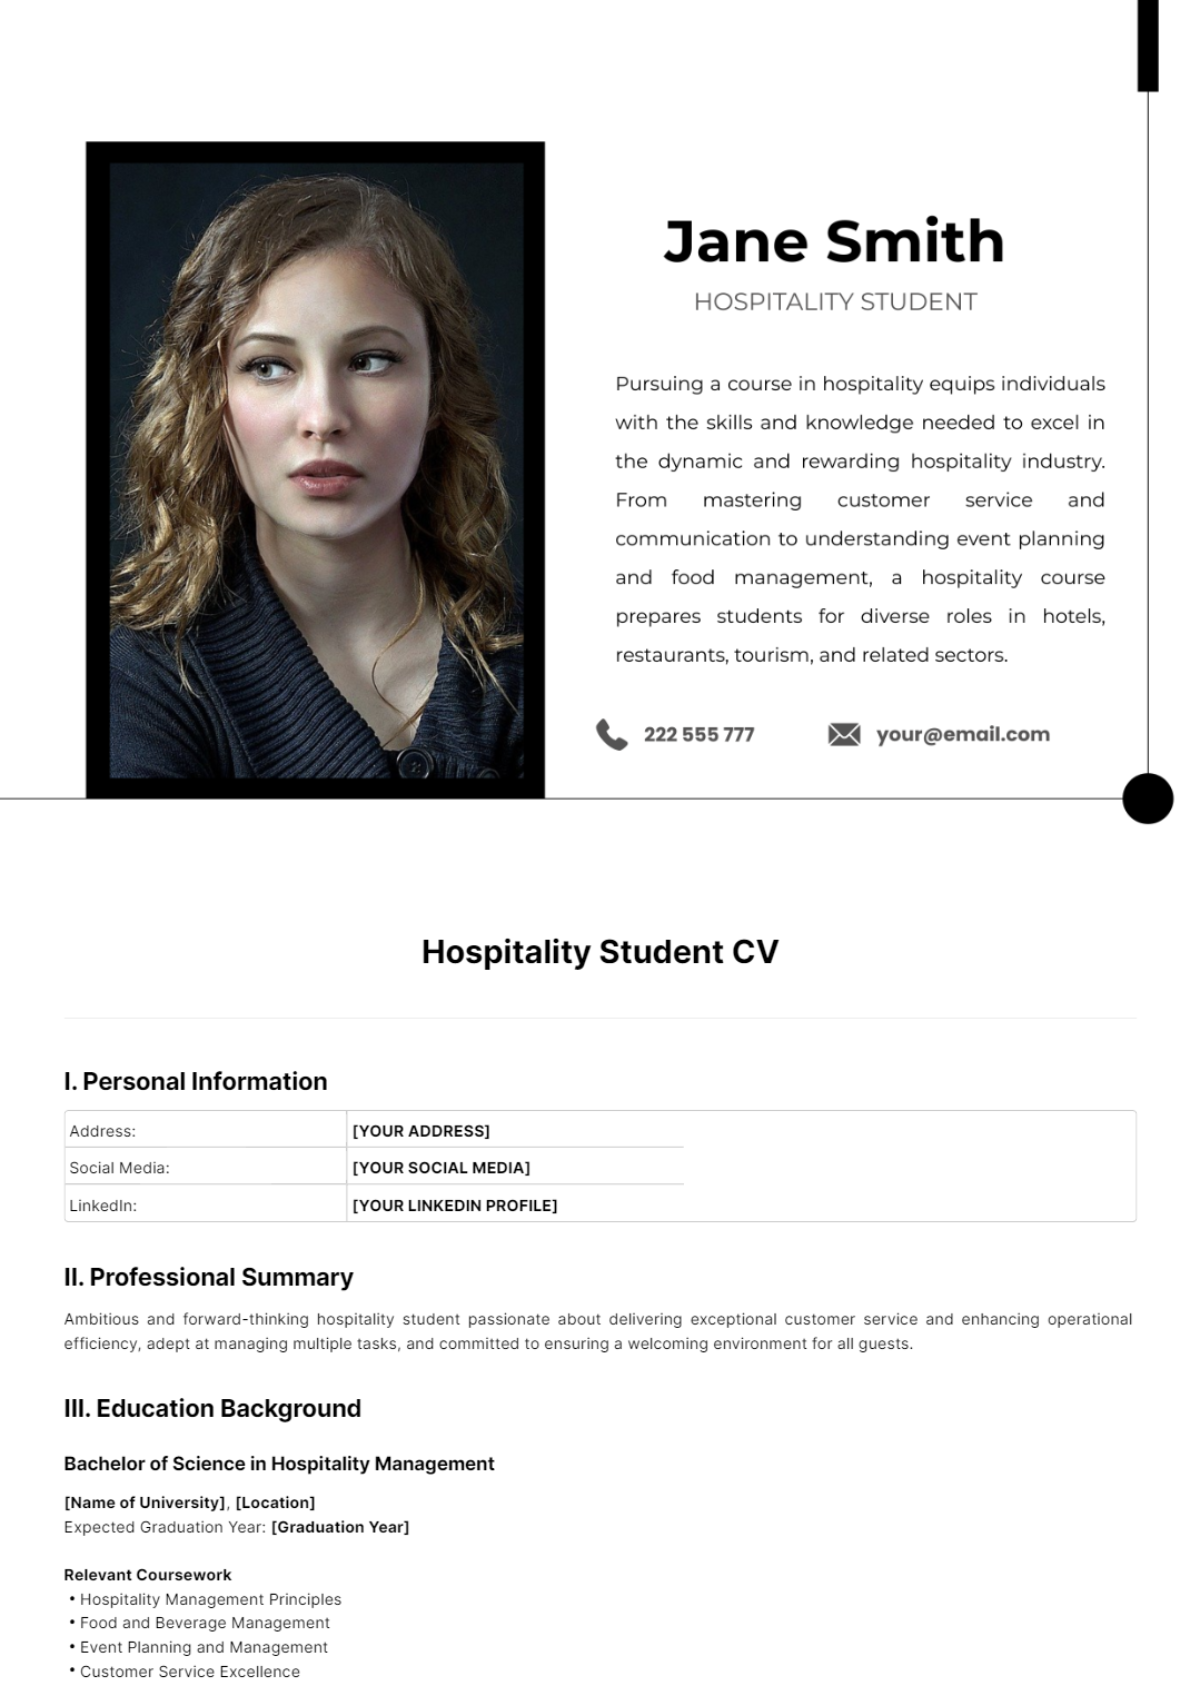 Hospitality Student CV Template